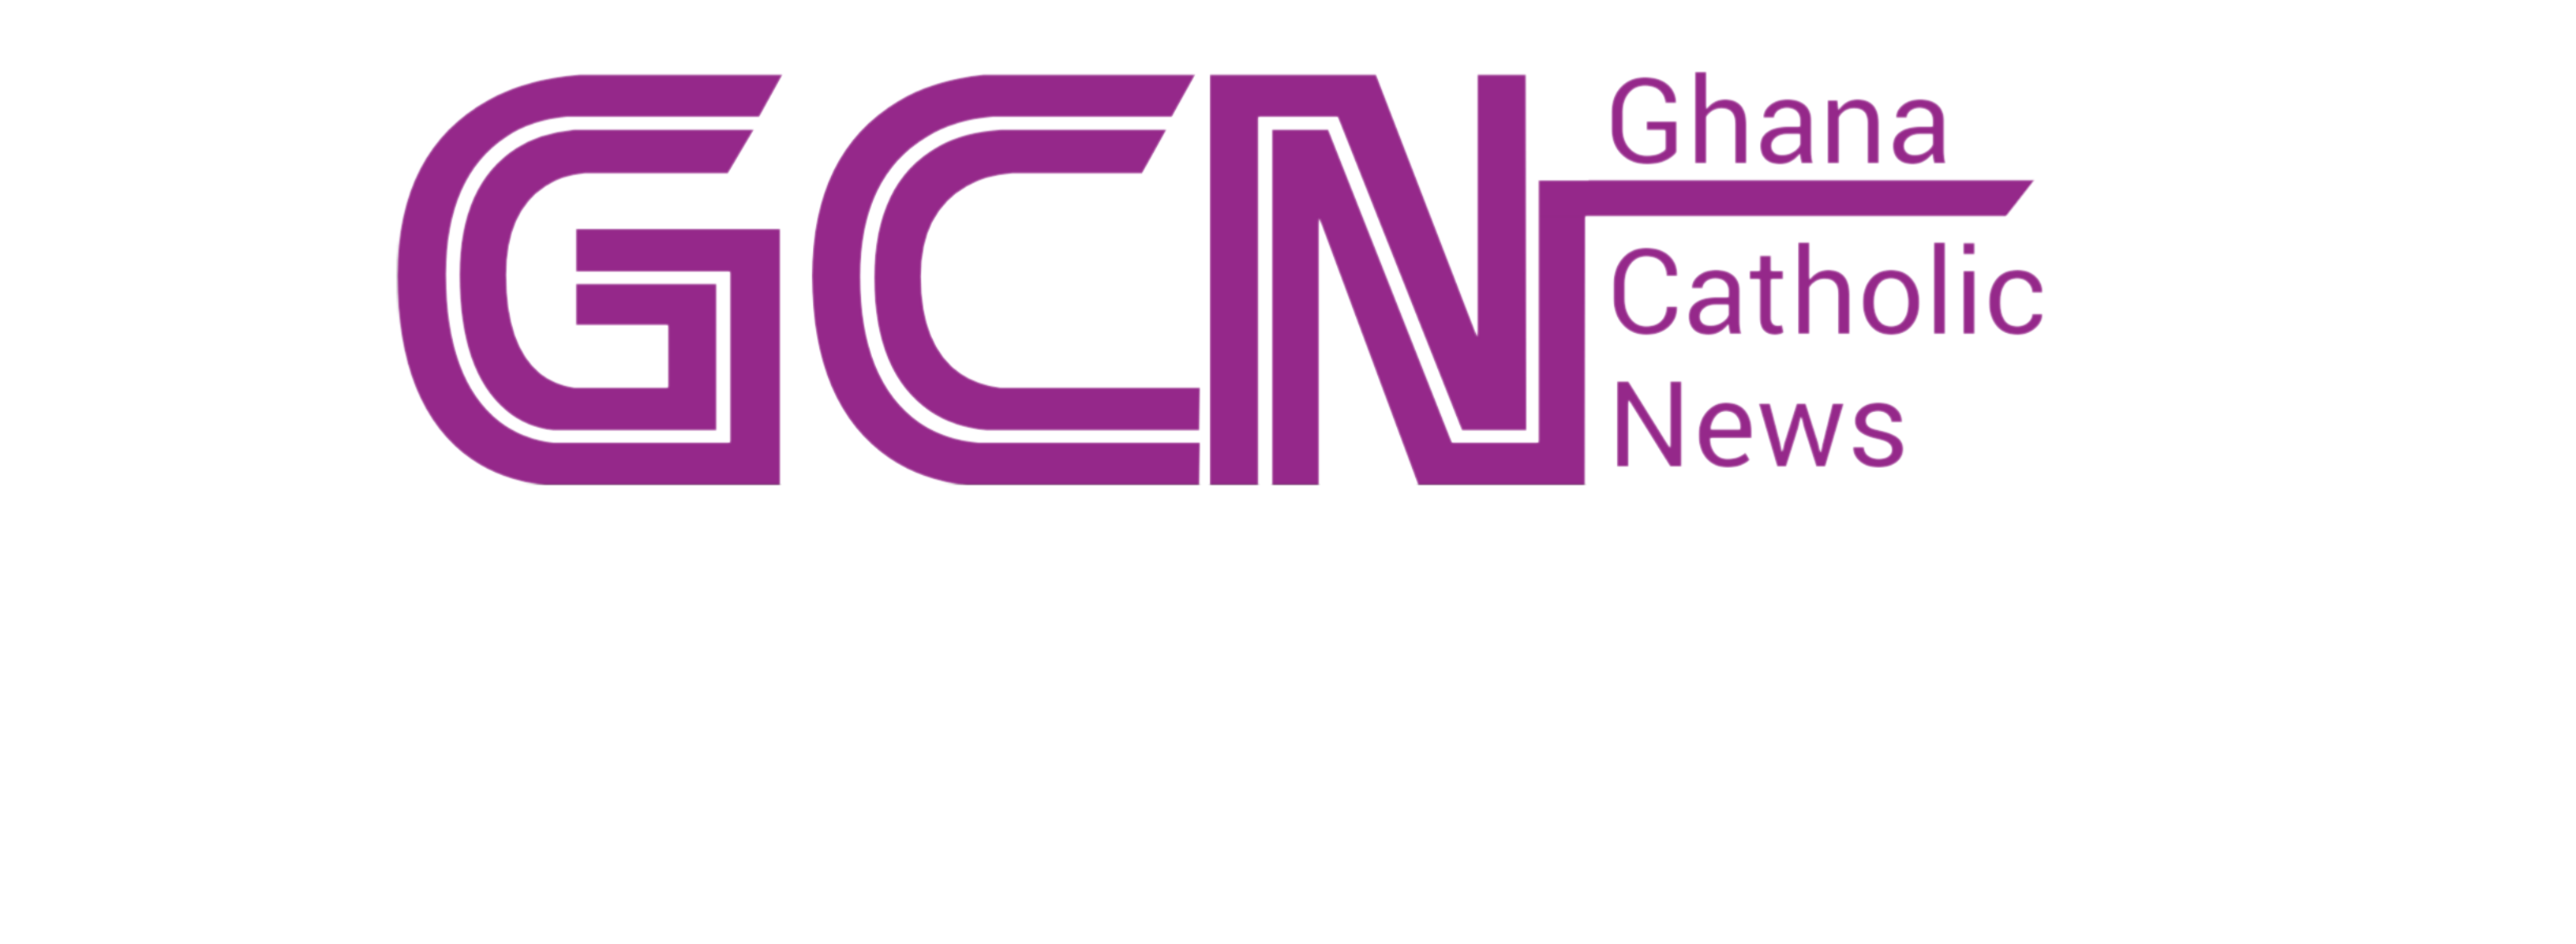 Ghana Catholic News